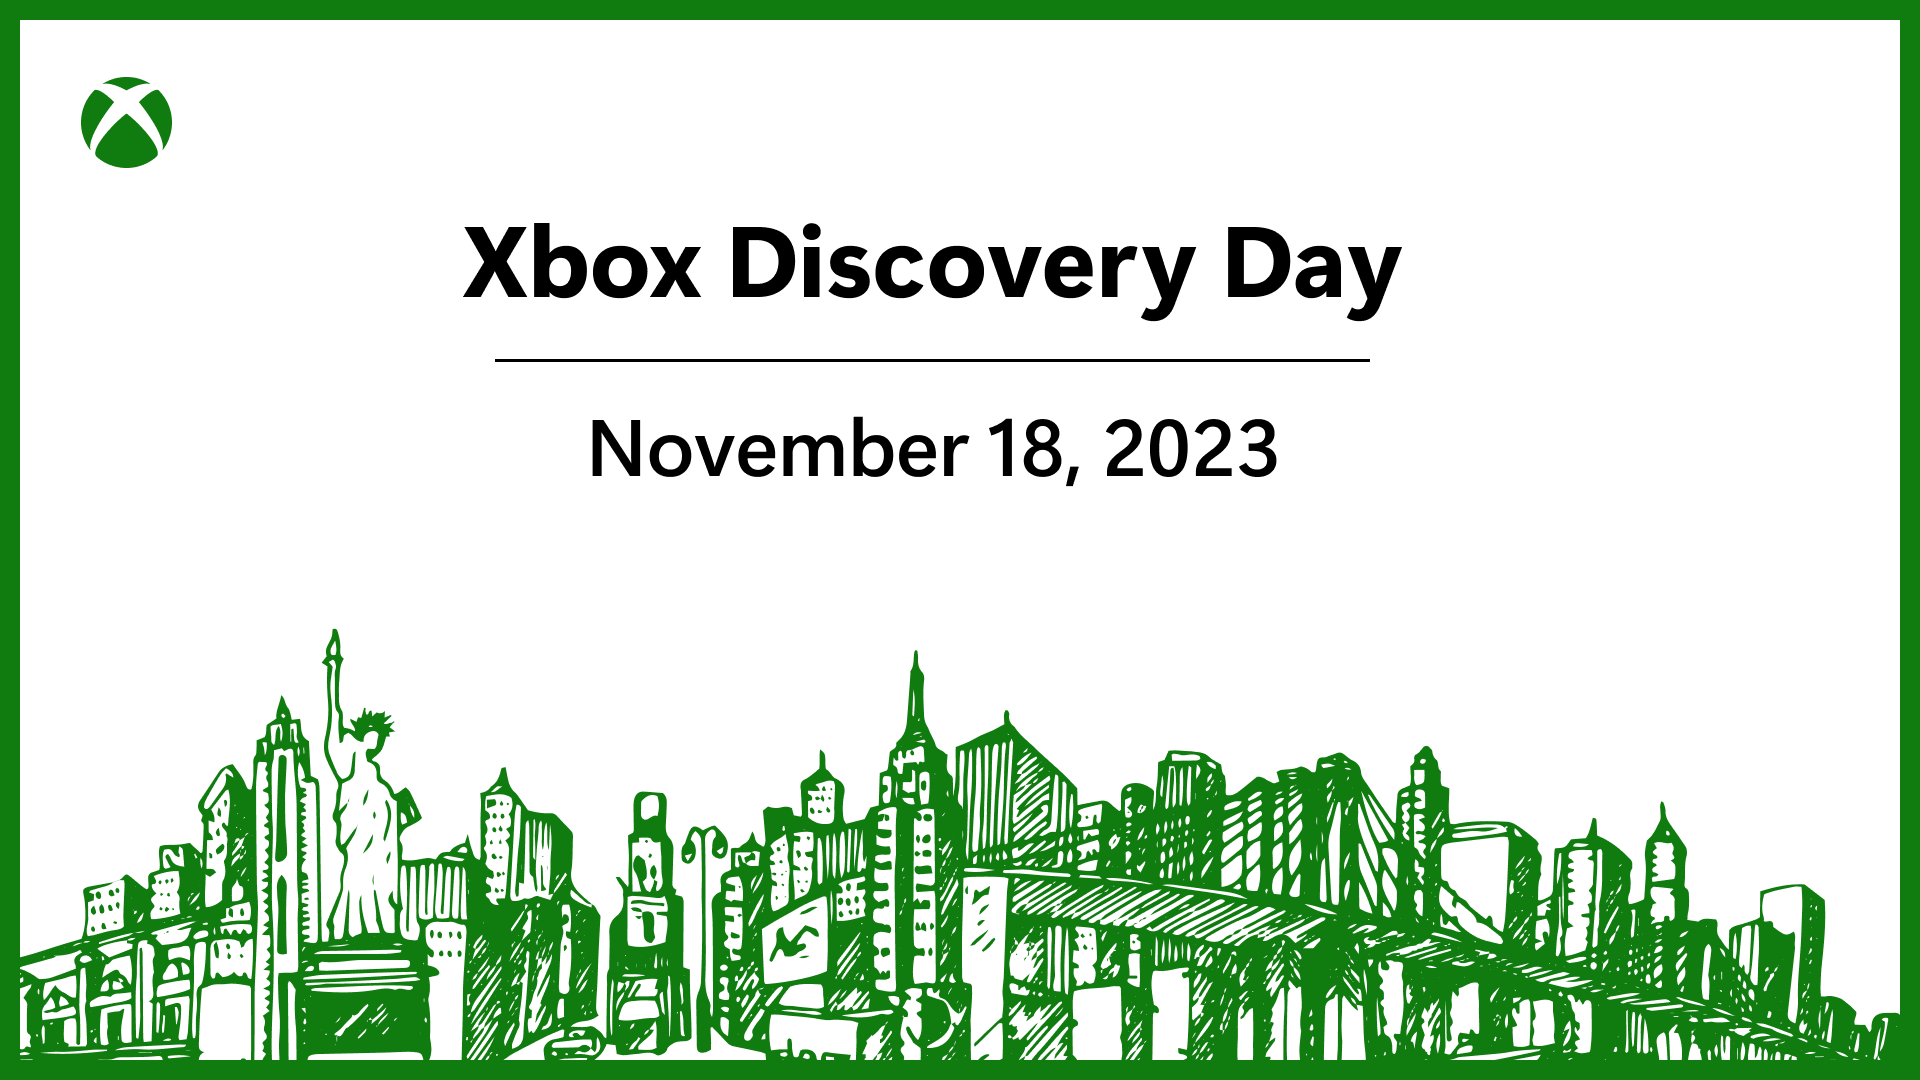 Xbox Discovery Day New York City Hero image